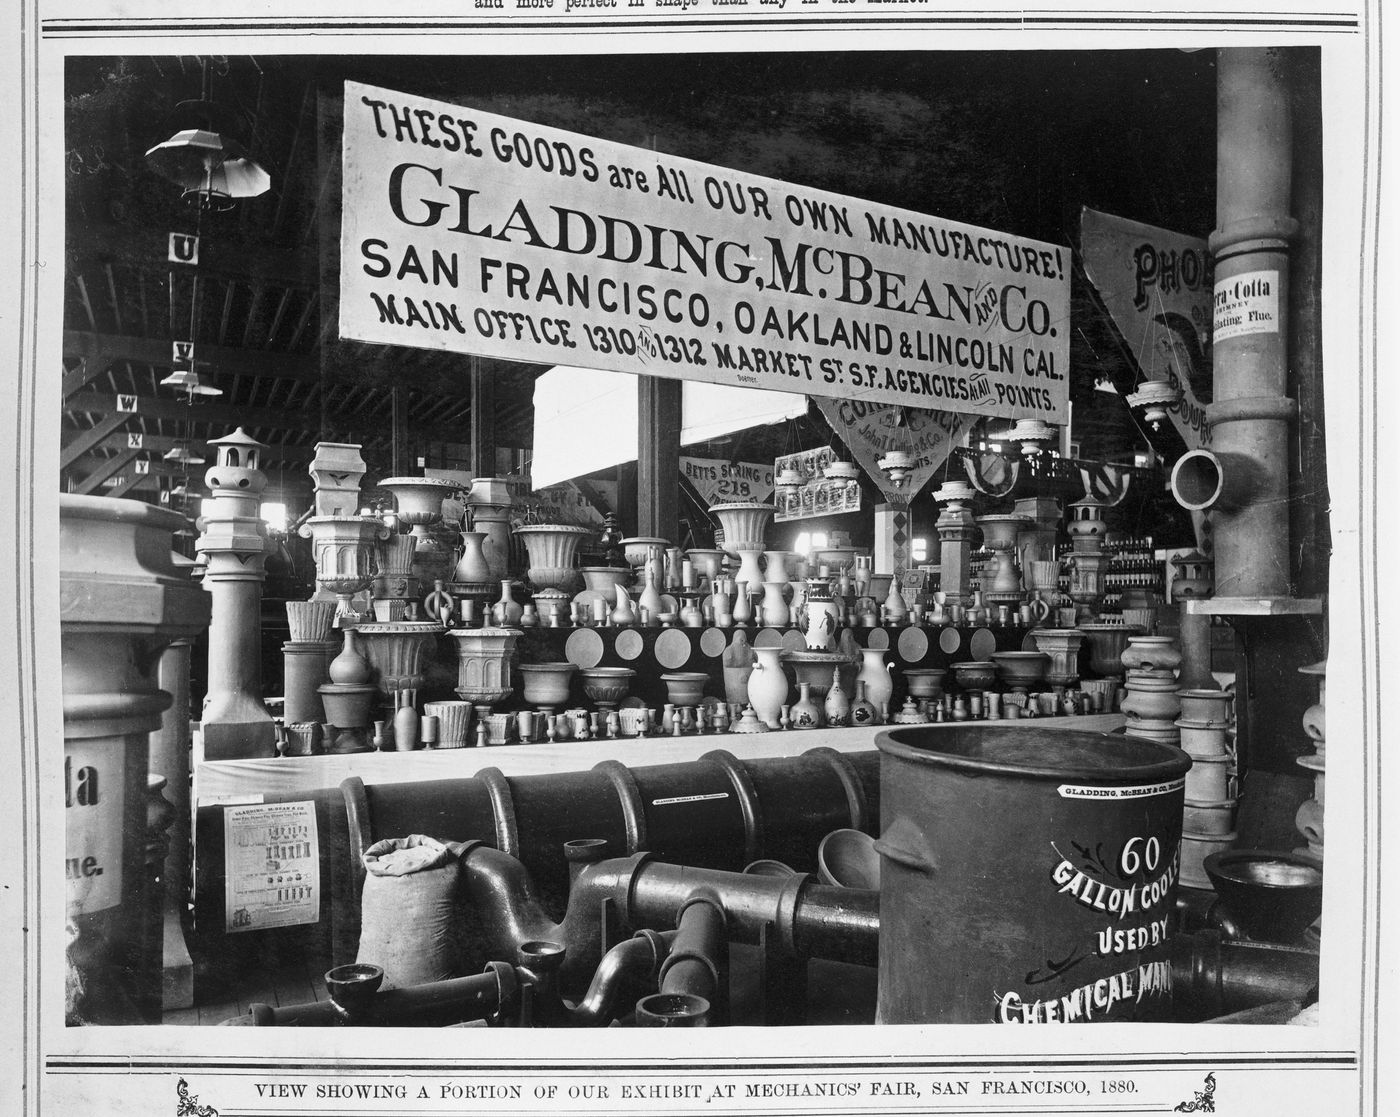 Mechanics' Fair: exhibit for Gladding, McBean & Co., manufacturers of terra cotta, San Francisco, California